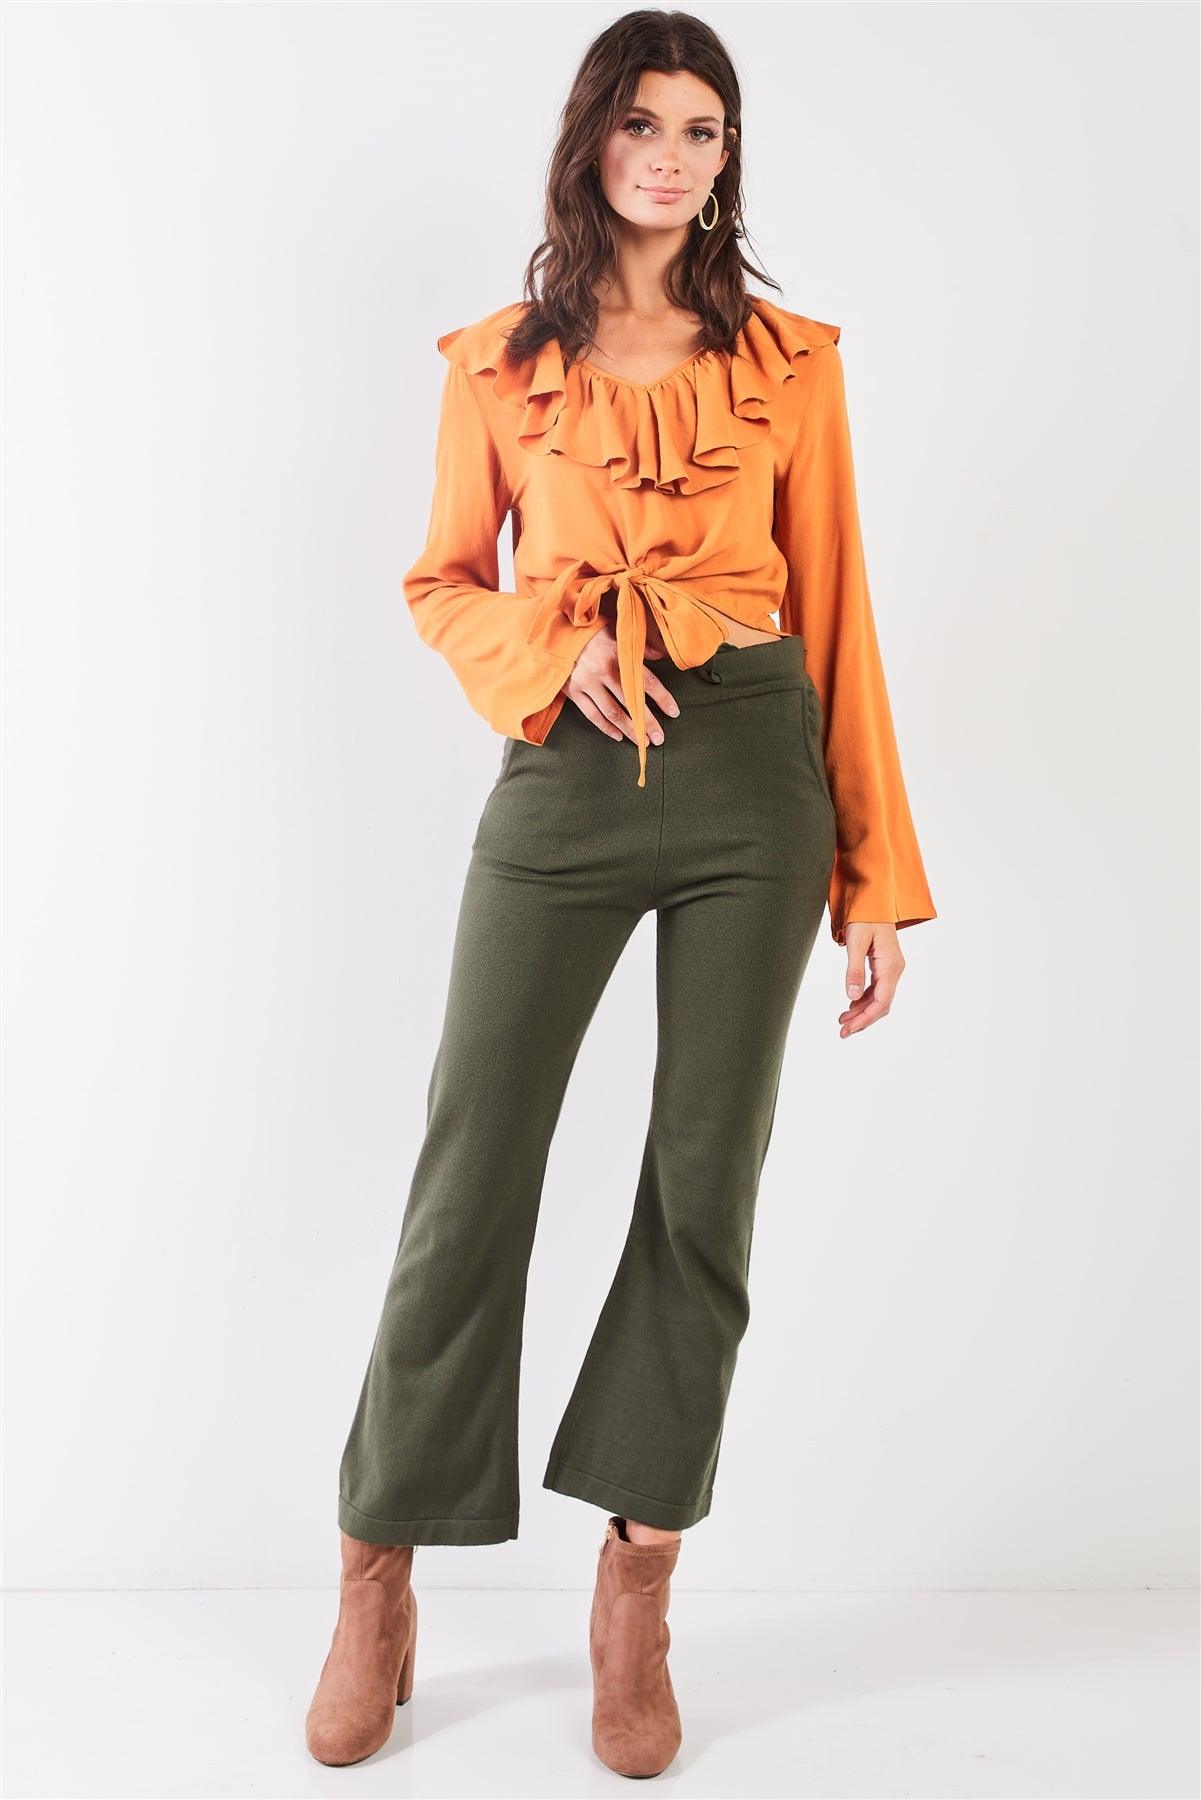 Papaya Orange Victorian Frill Collar Trim Wide Long Sleeve Self-Tie Front Detail Crop Top /2-1-2